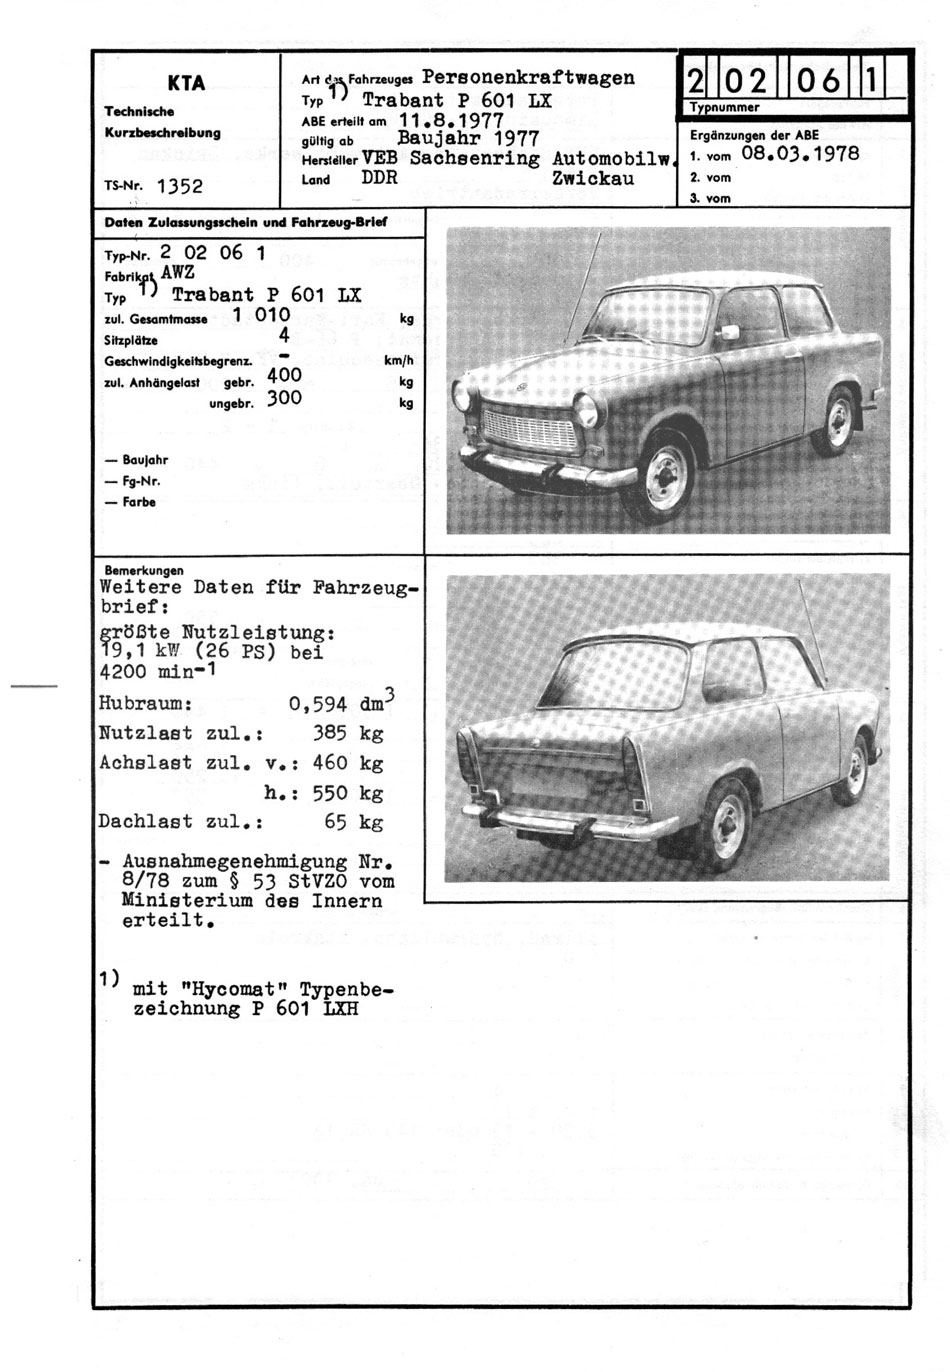 KTA-Datenblatt - P 601 LX Seite 1